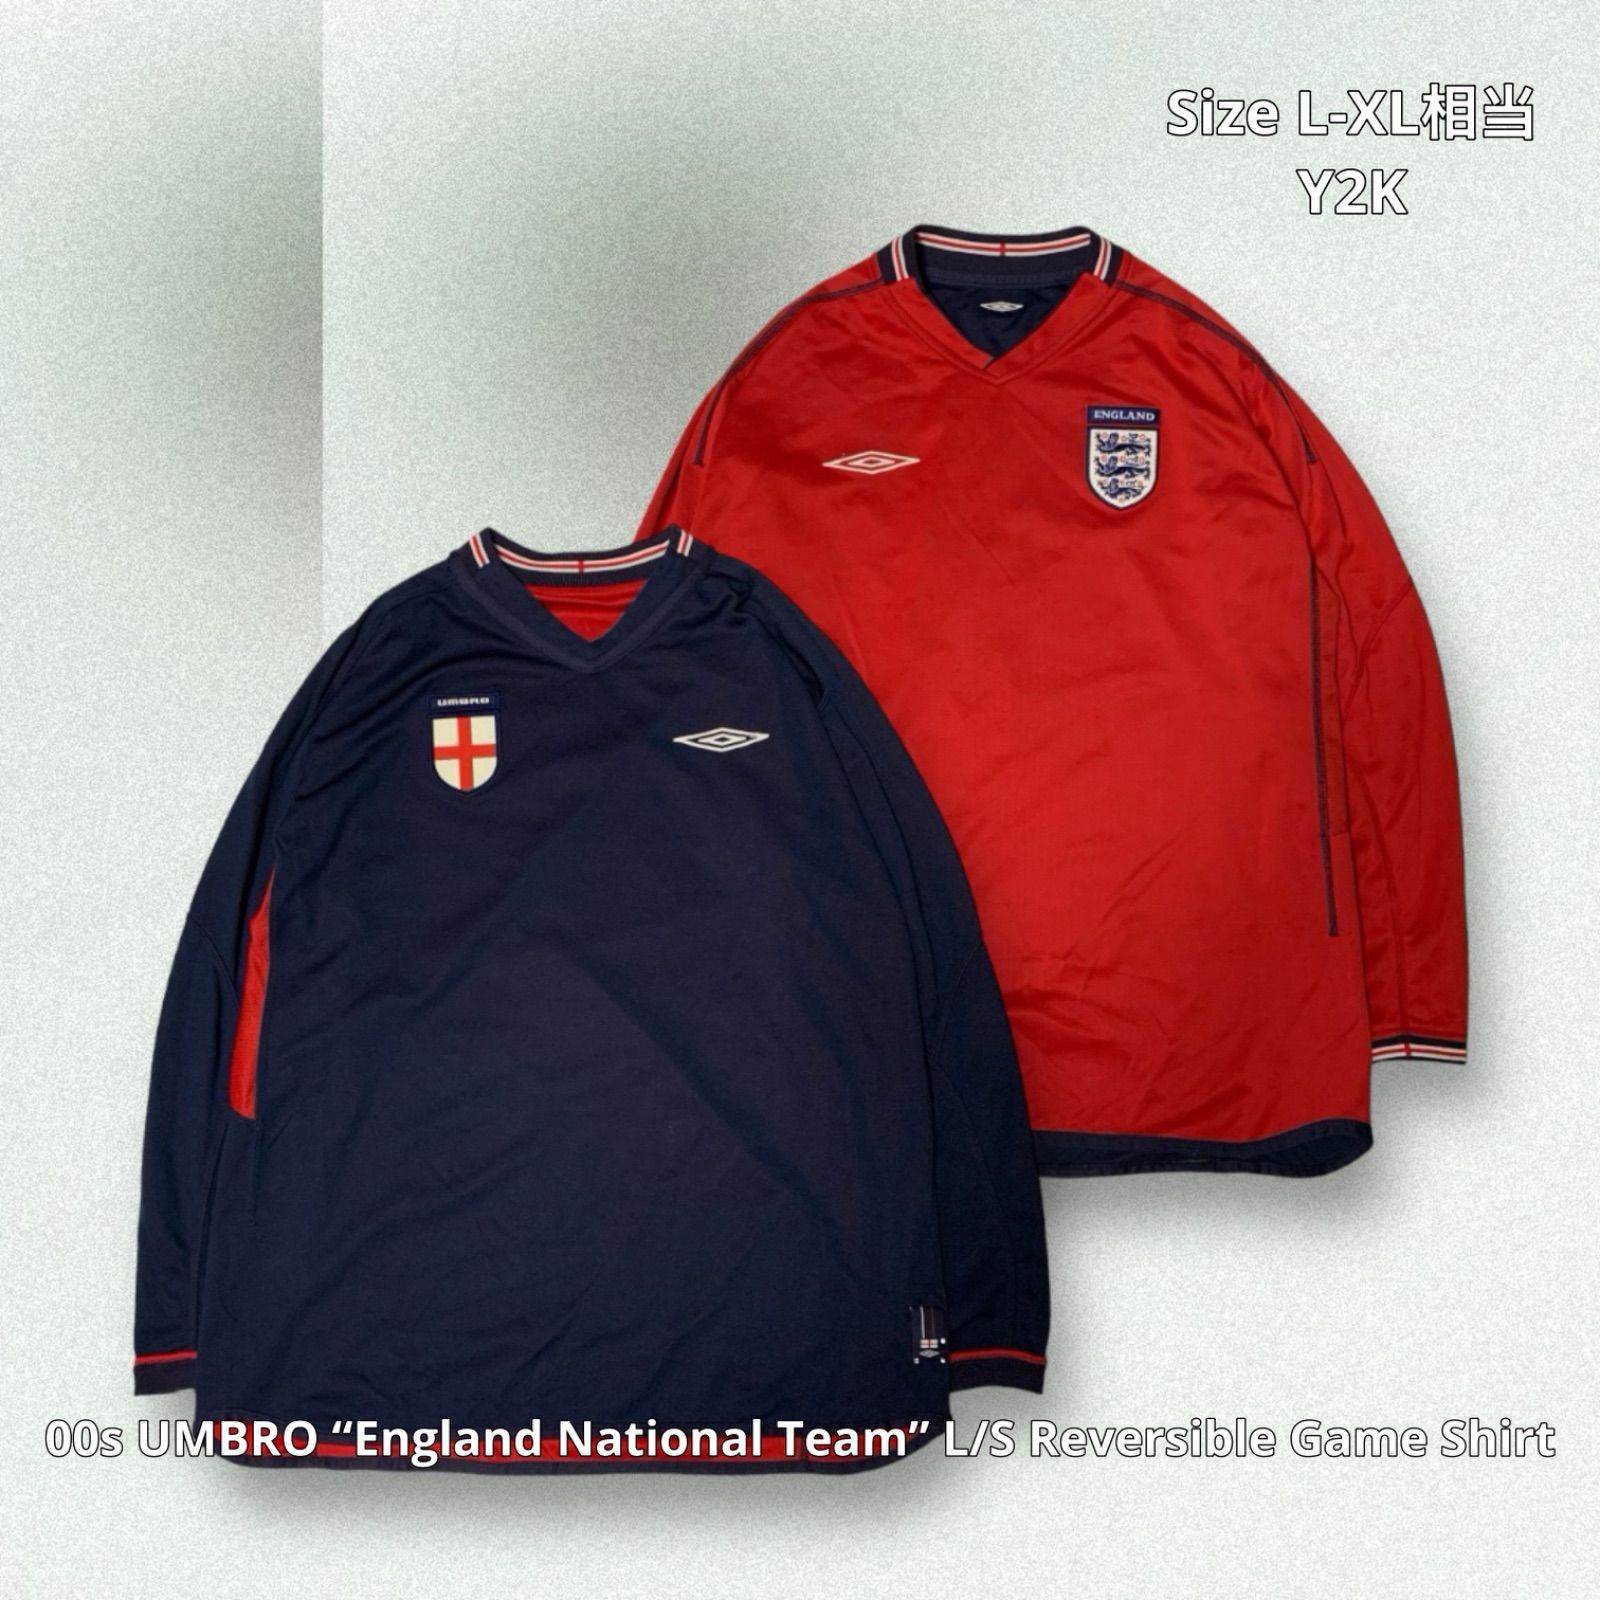 00s UMBRO “England National Team” L/S Reversible Game Shirt